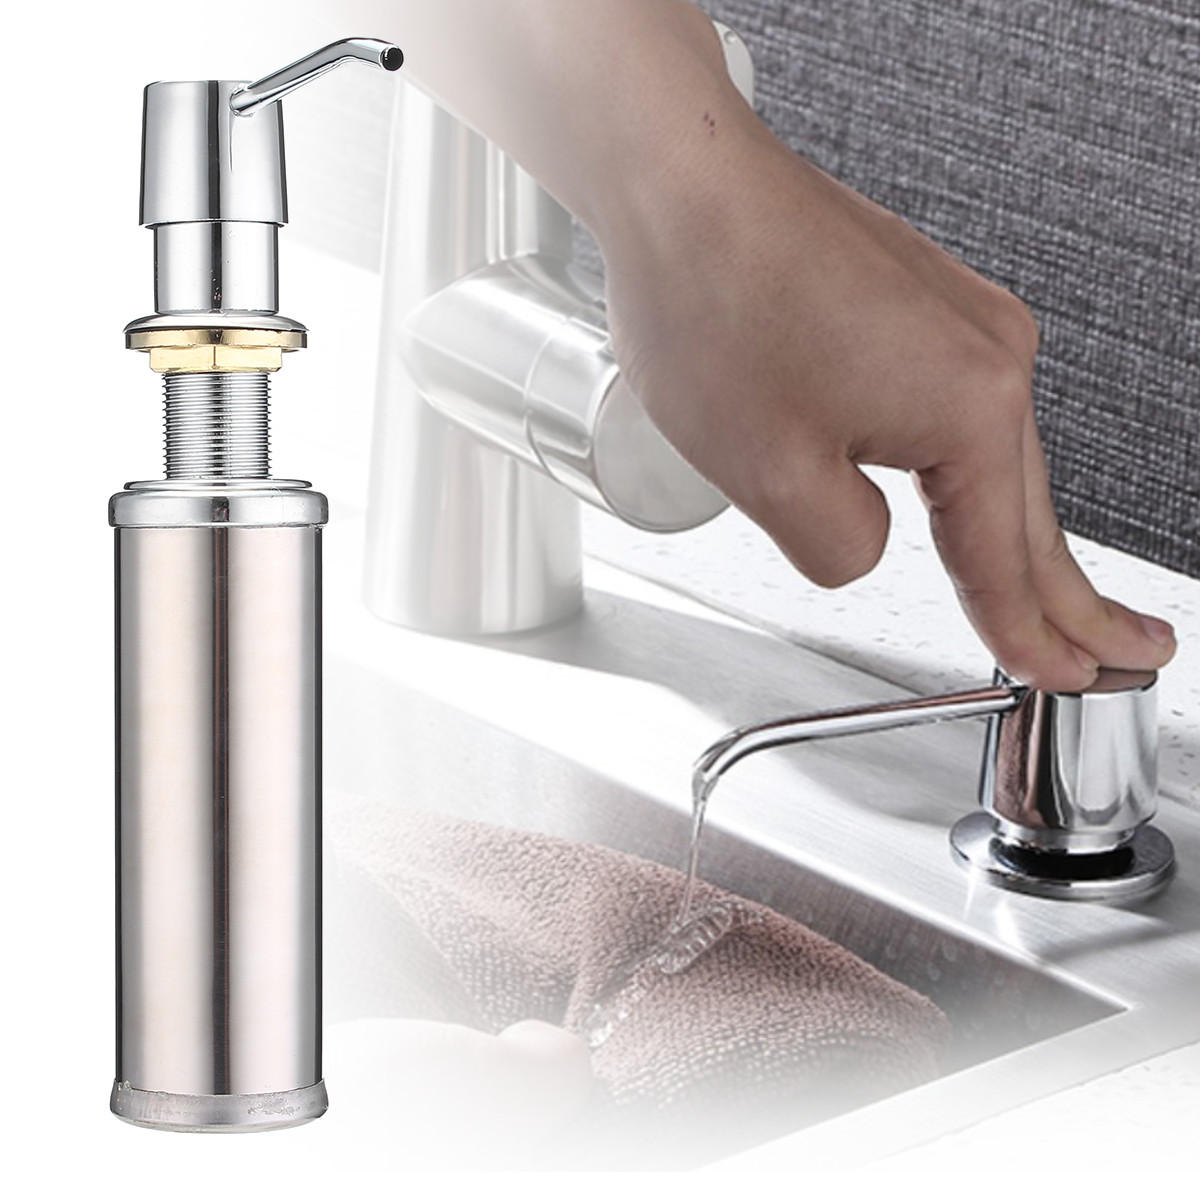 Sliver Stainless Steel Liquid Soap Dispenser Bathroom Kitchen Sink Pump Bottles Sale Banggoodcom Sold Out Arrival Notice Arrival Notice Shopping Southeast Asia